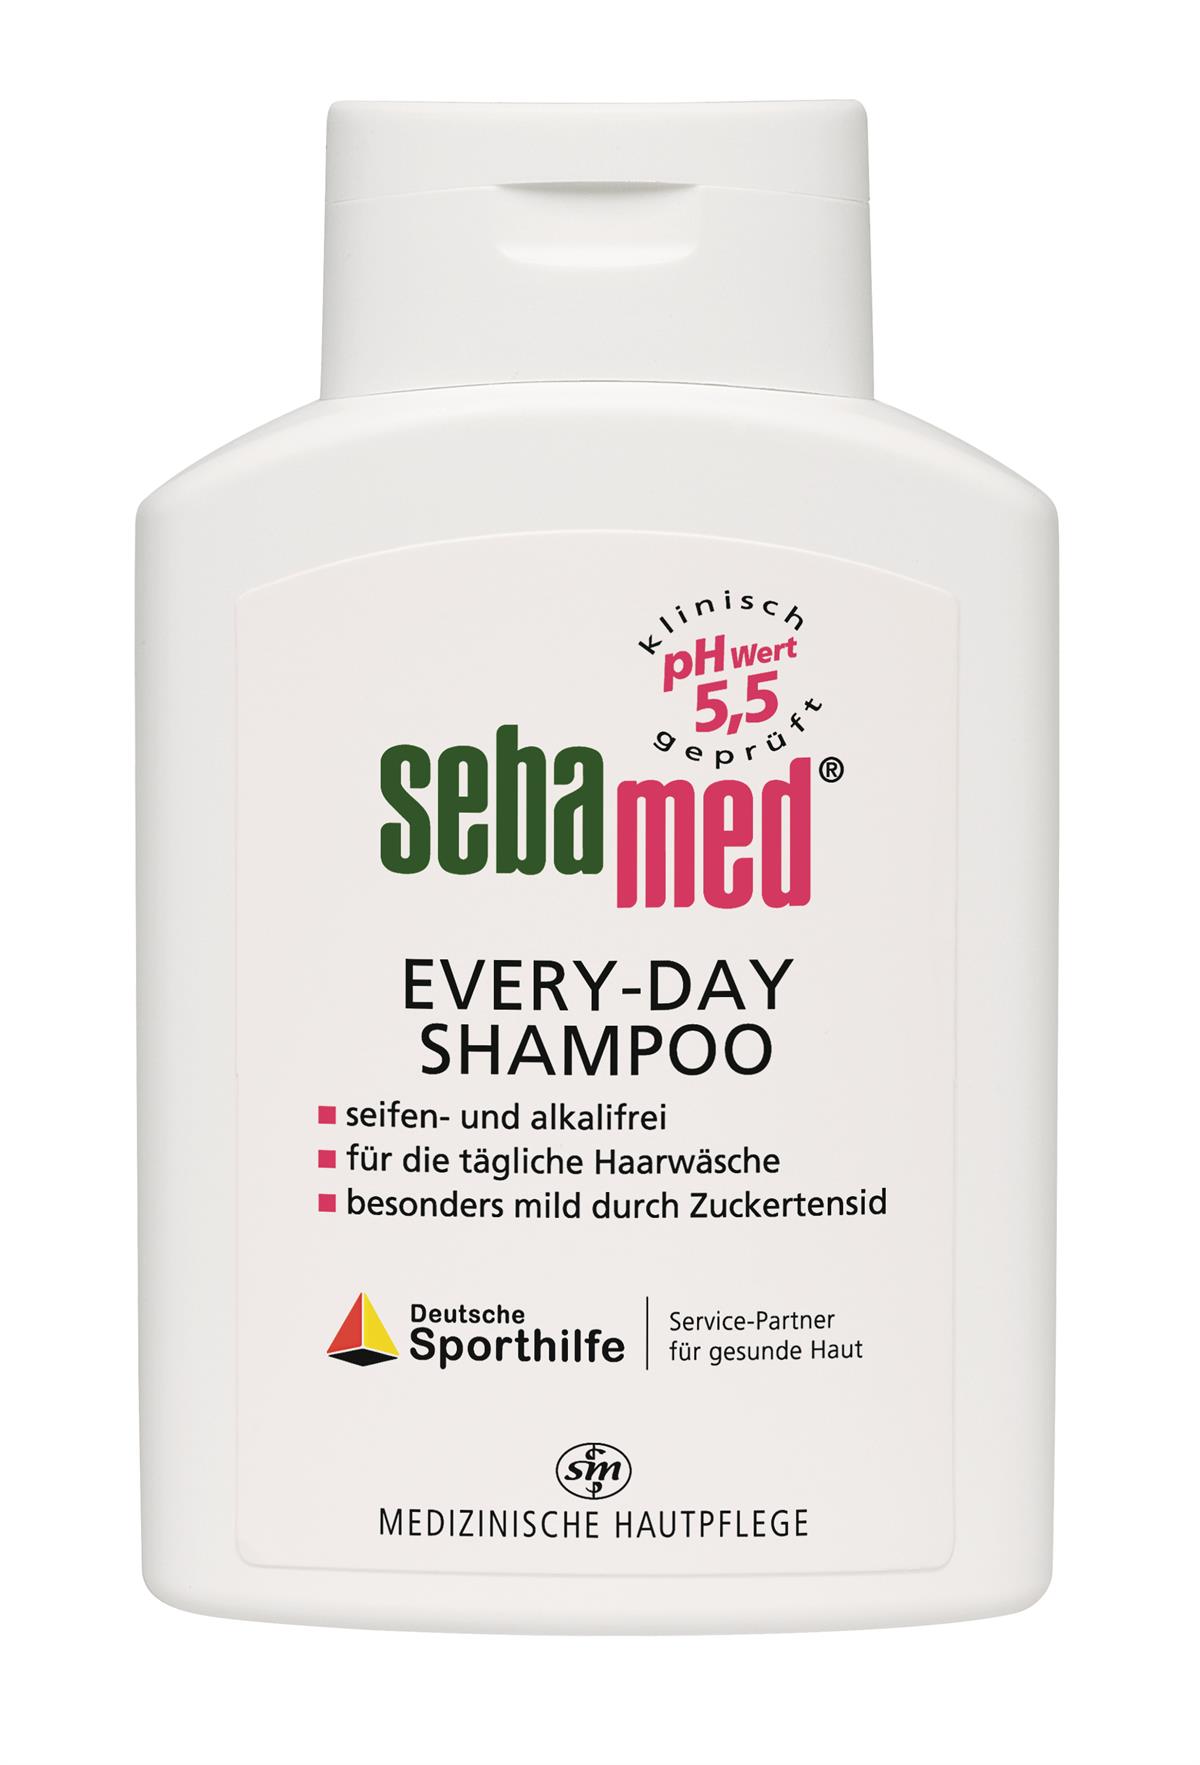 sebamed Every-Day Shampoo 